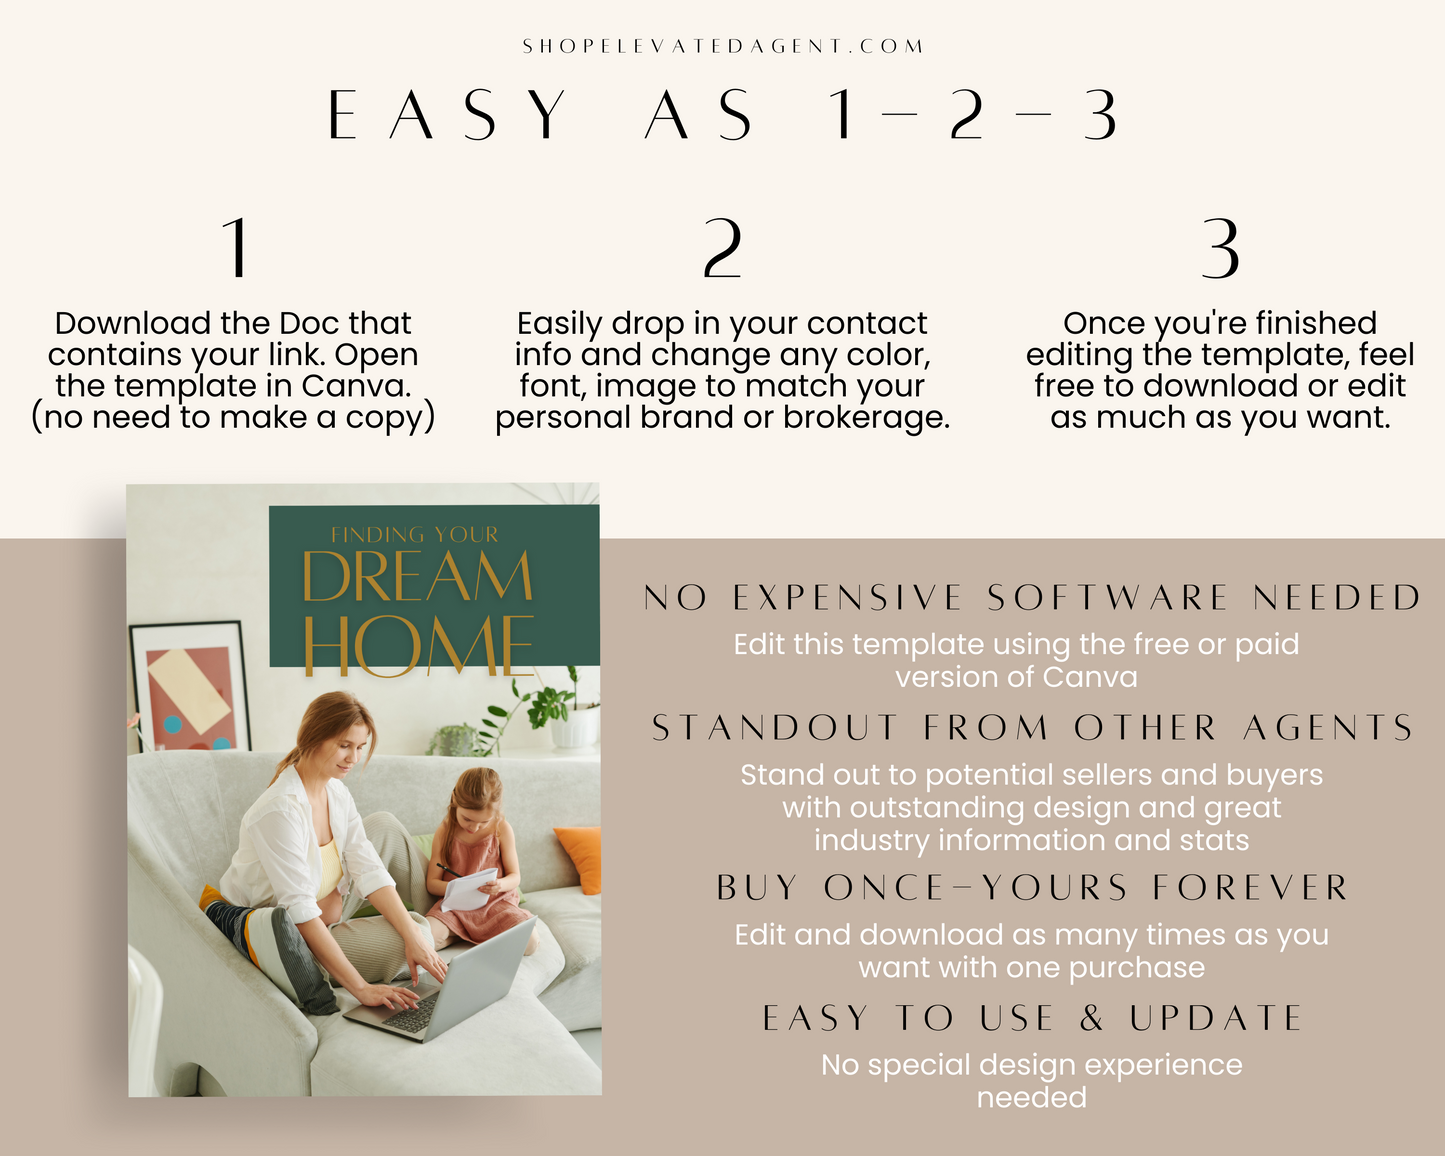 Dream Home Checklist - Exclusive Brand Style